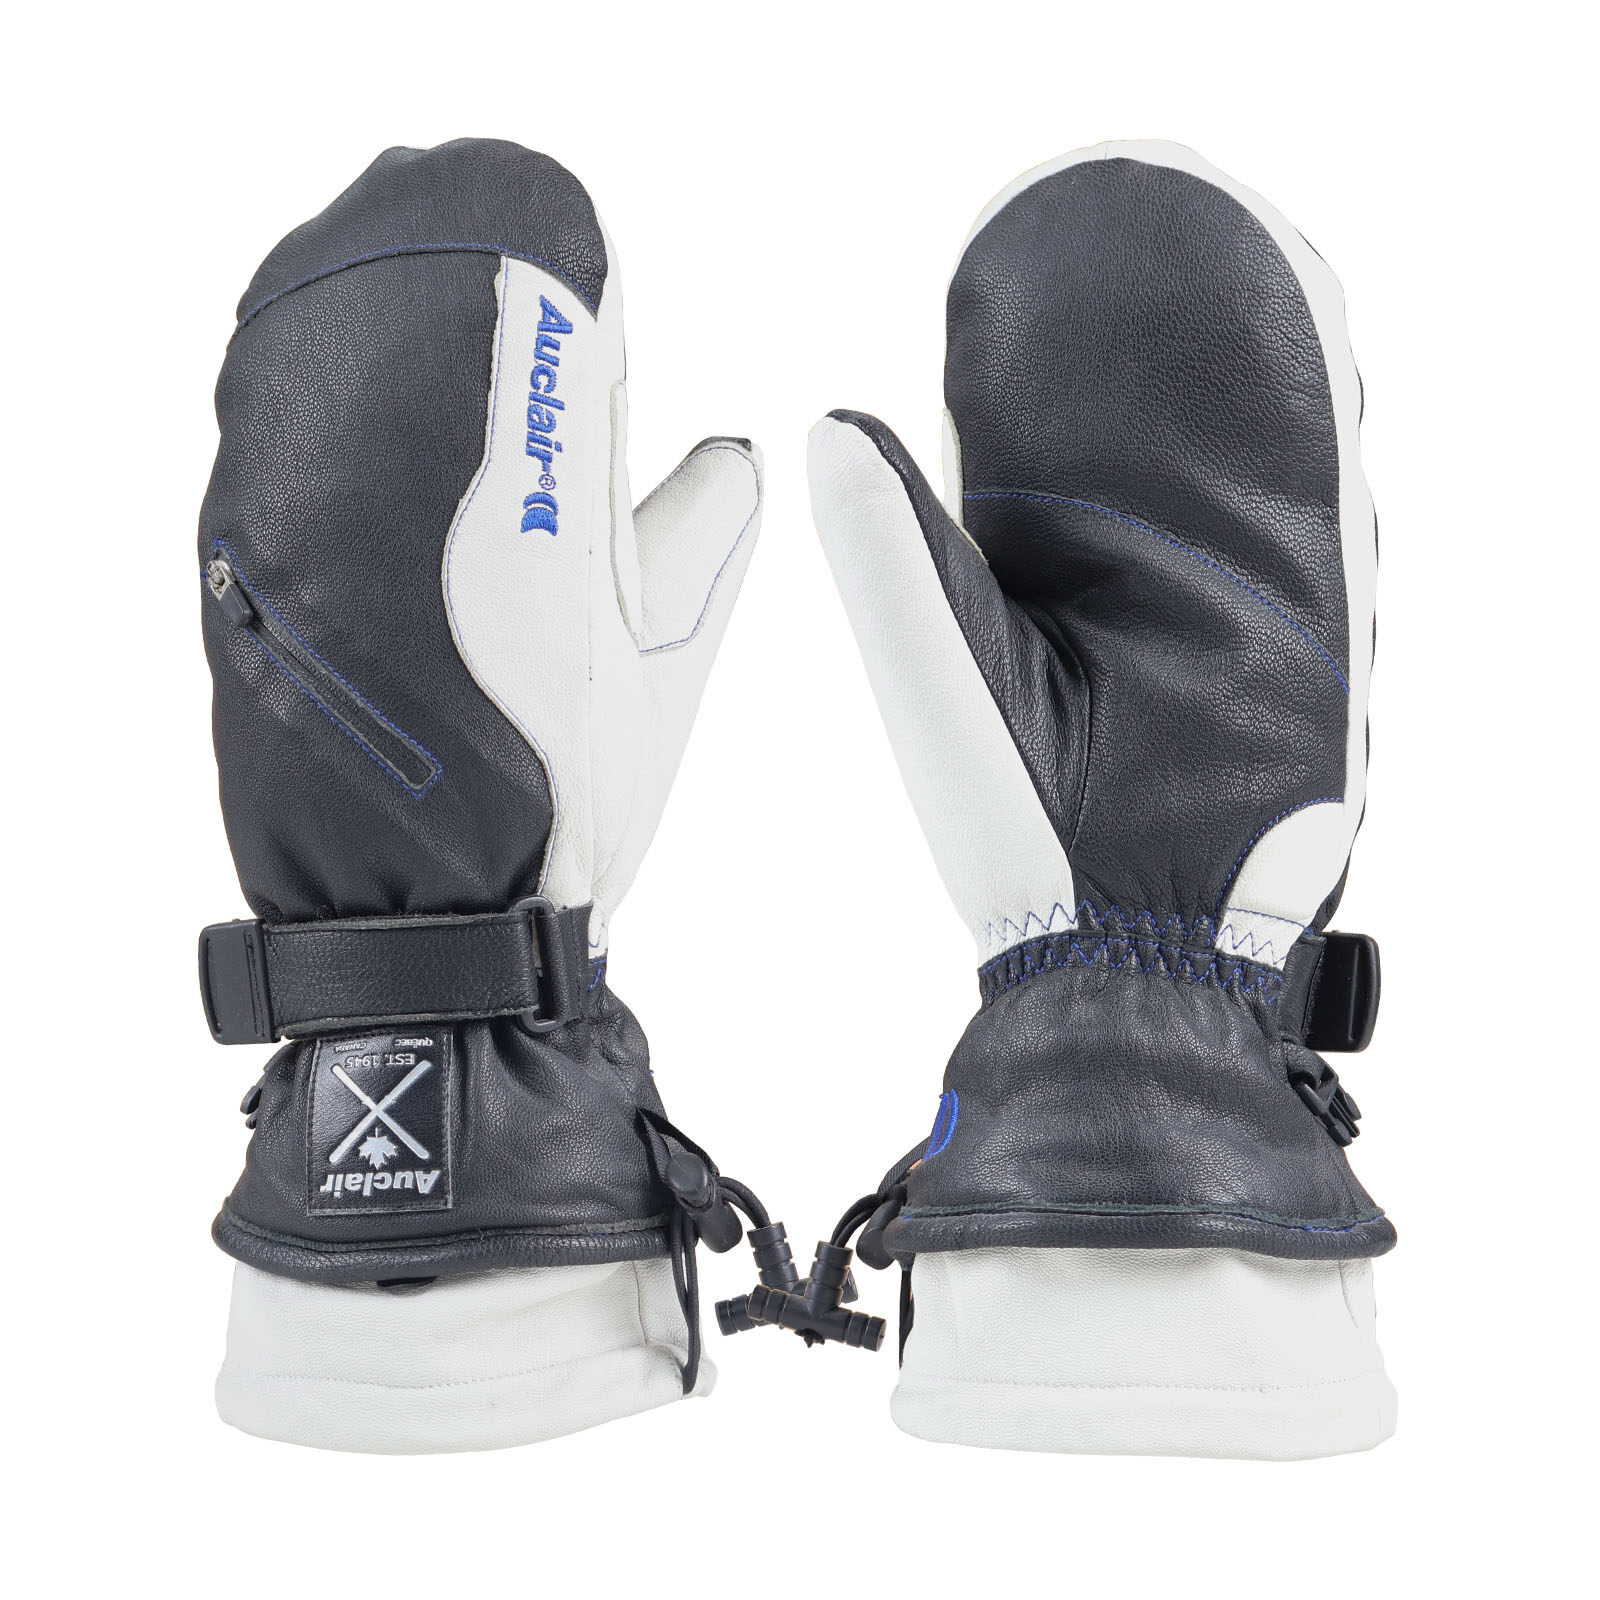 Unisex Ski Gloves